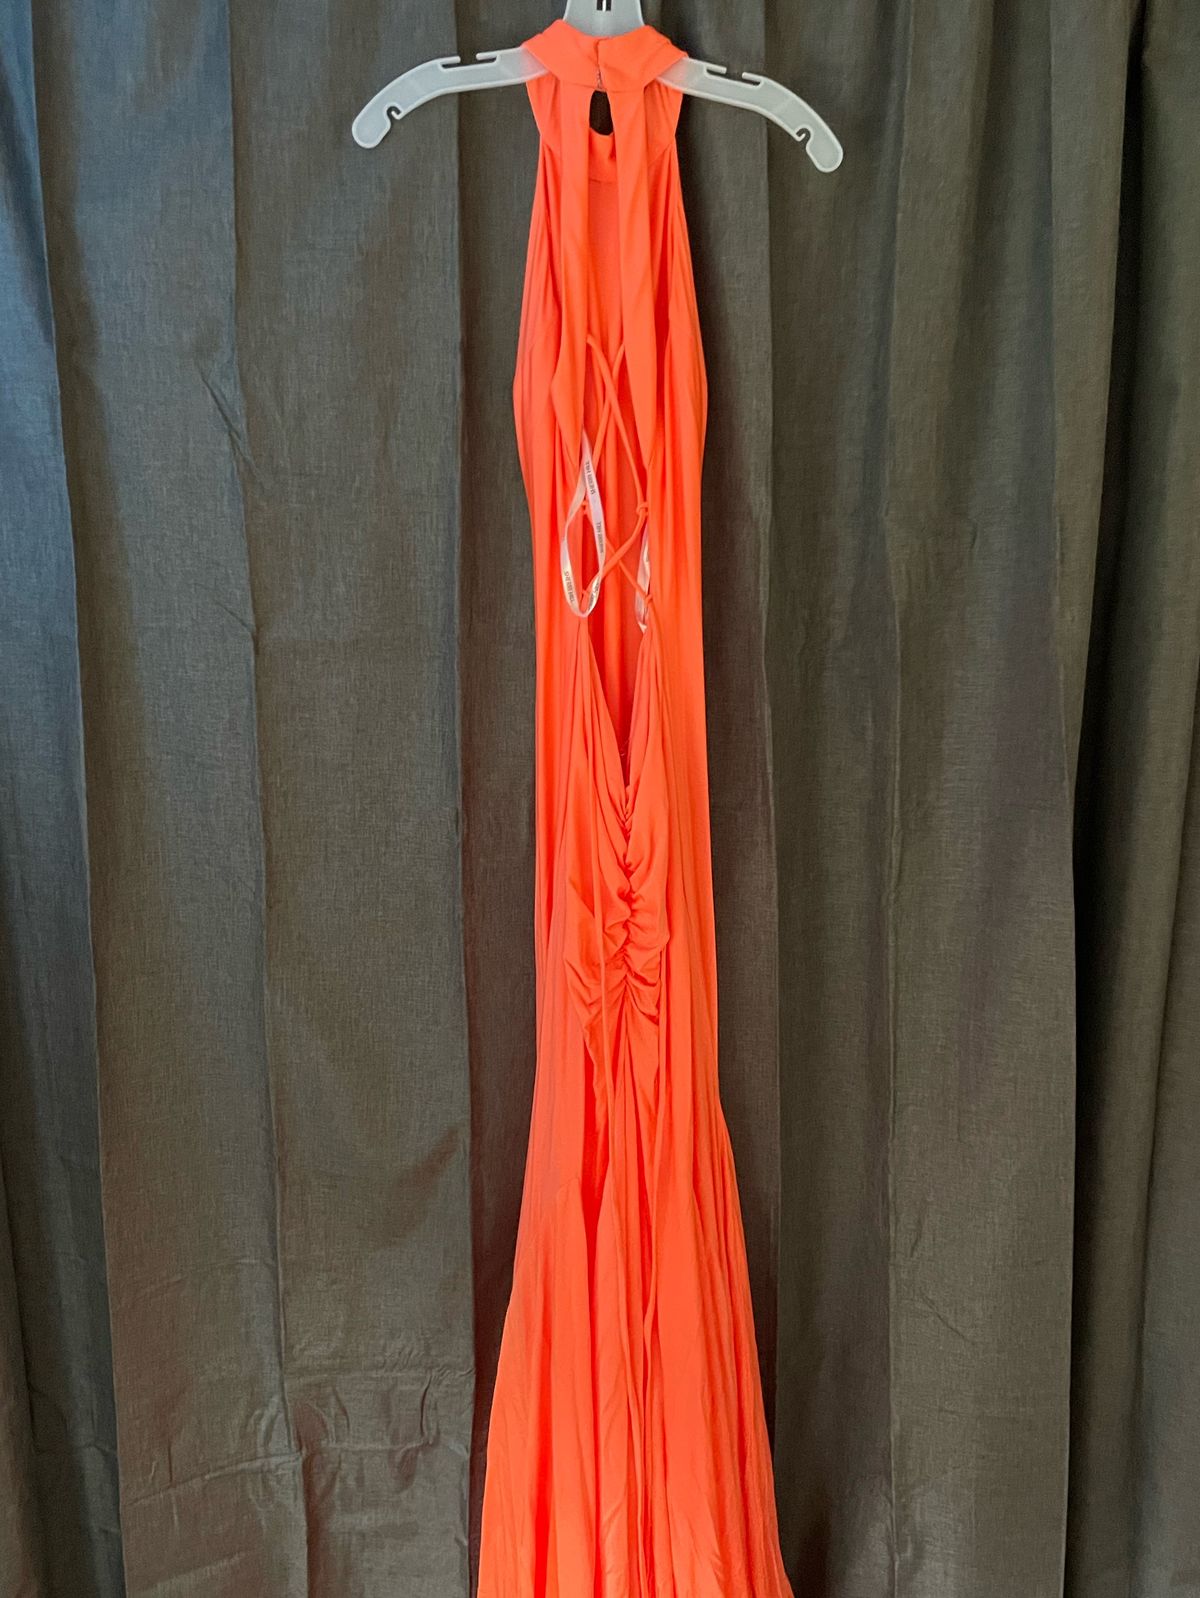 Sherri Hill Size 4 Prom Orange Mermaid Dress on Queenly